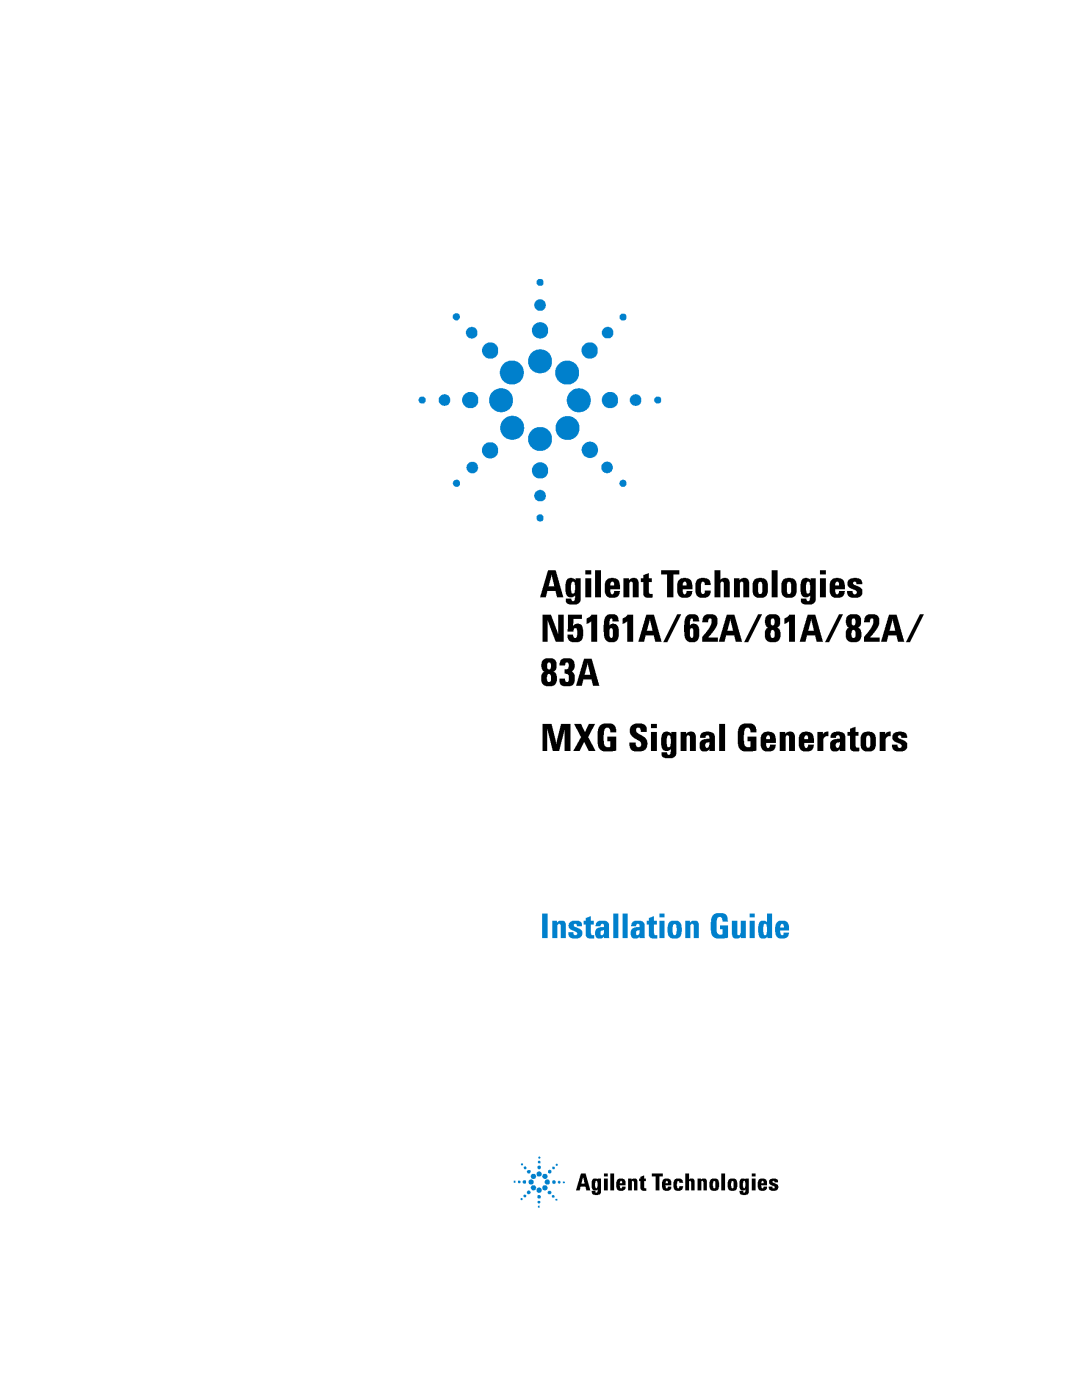 Agilent Technologies manual Agilent Technologies N5161A/62A/81A/82A/ 83A, MXG Signal Generators, Installation Guide 